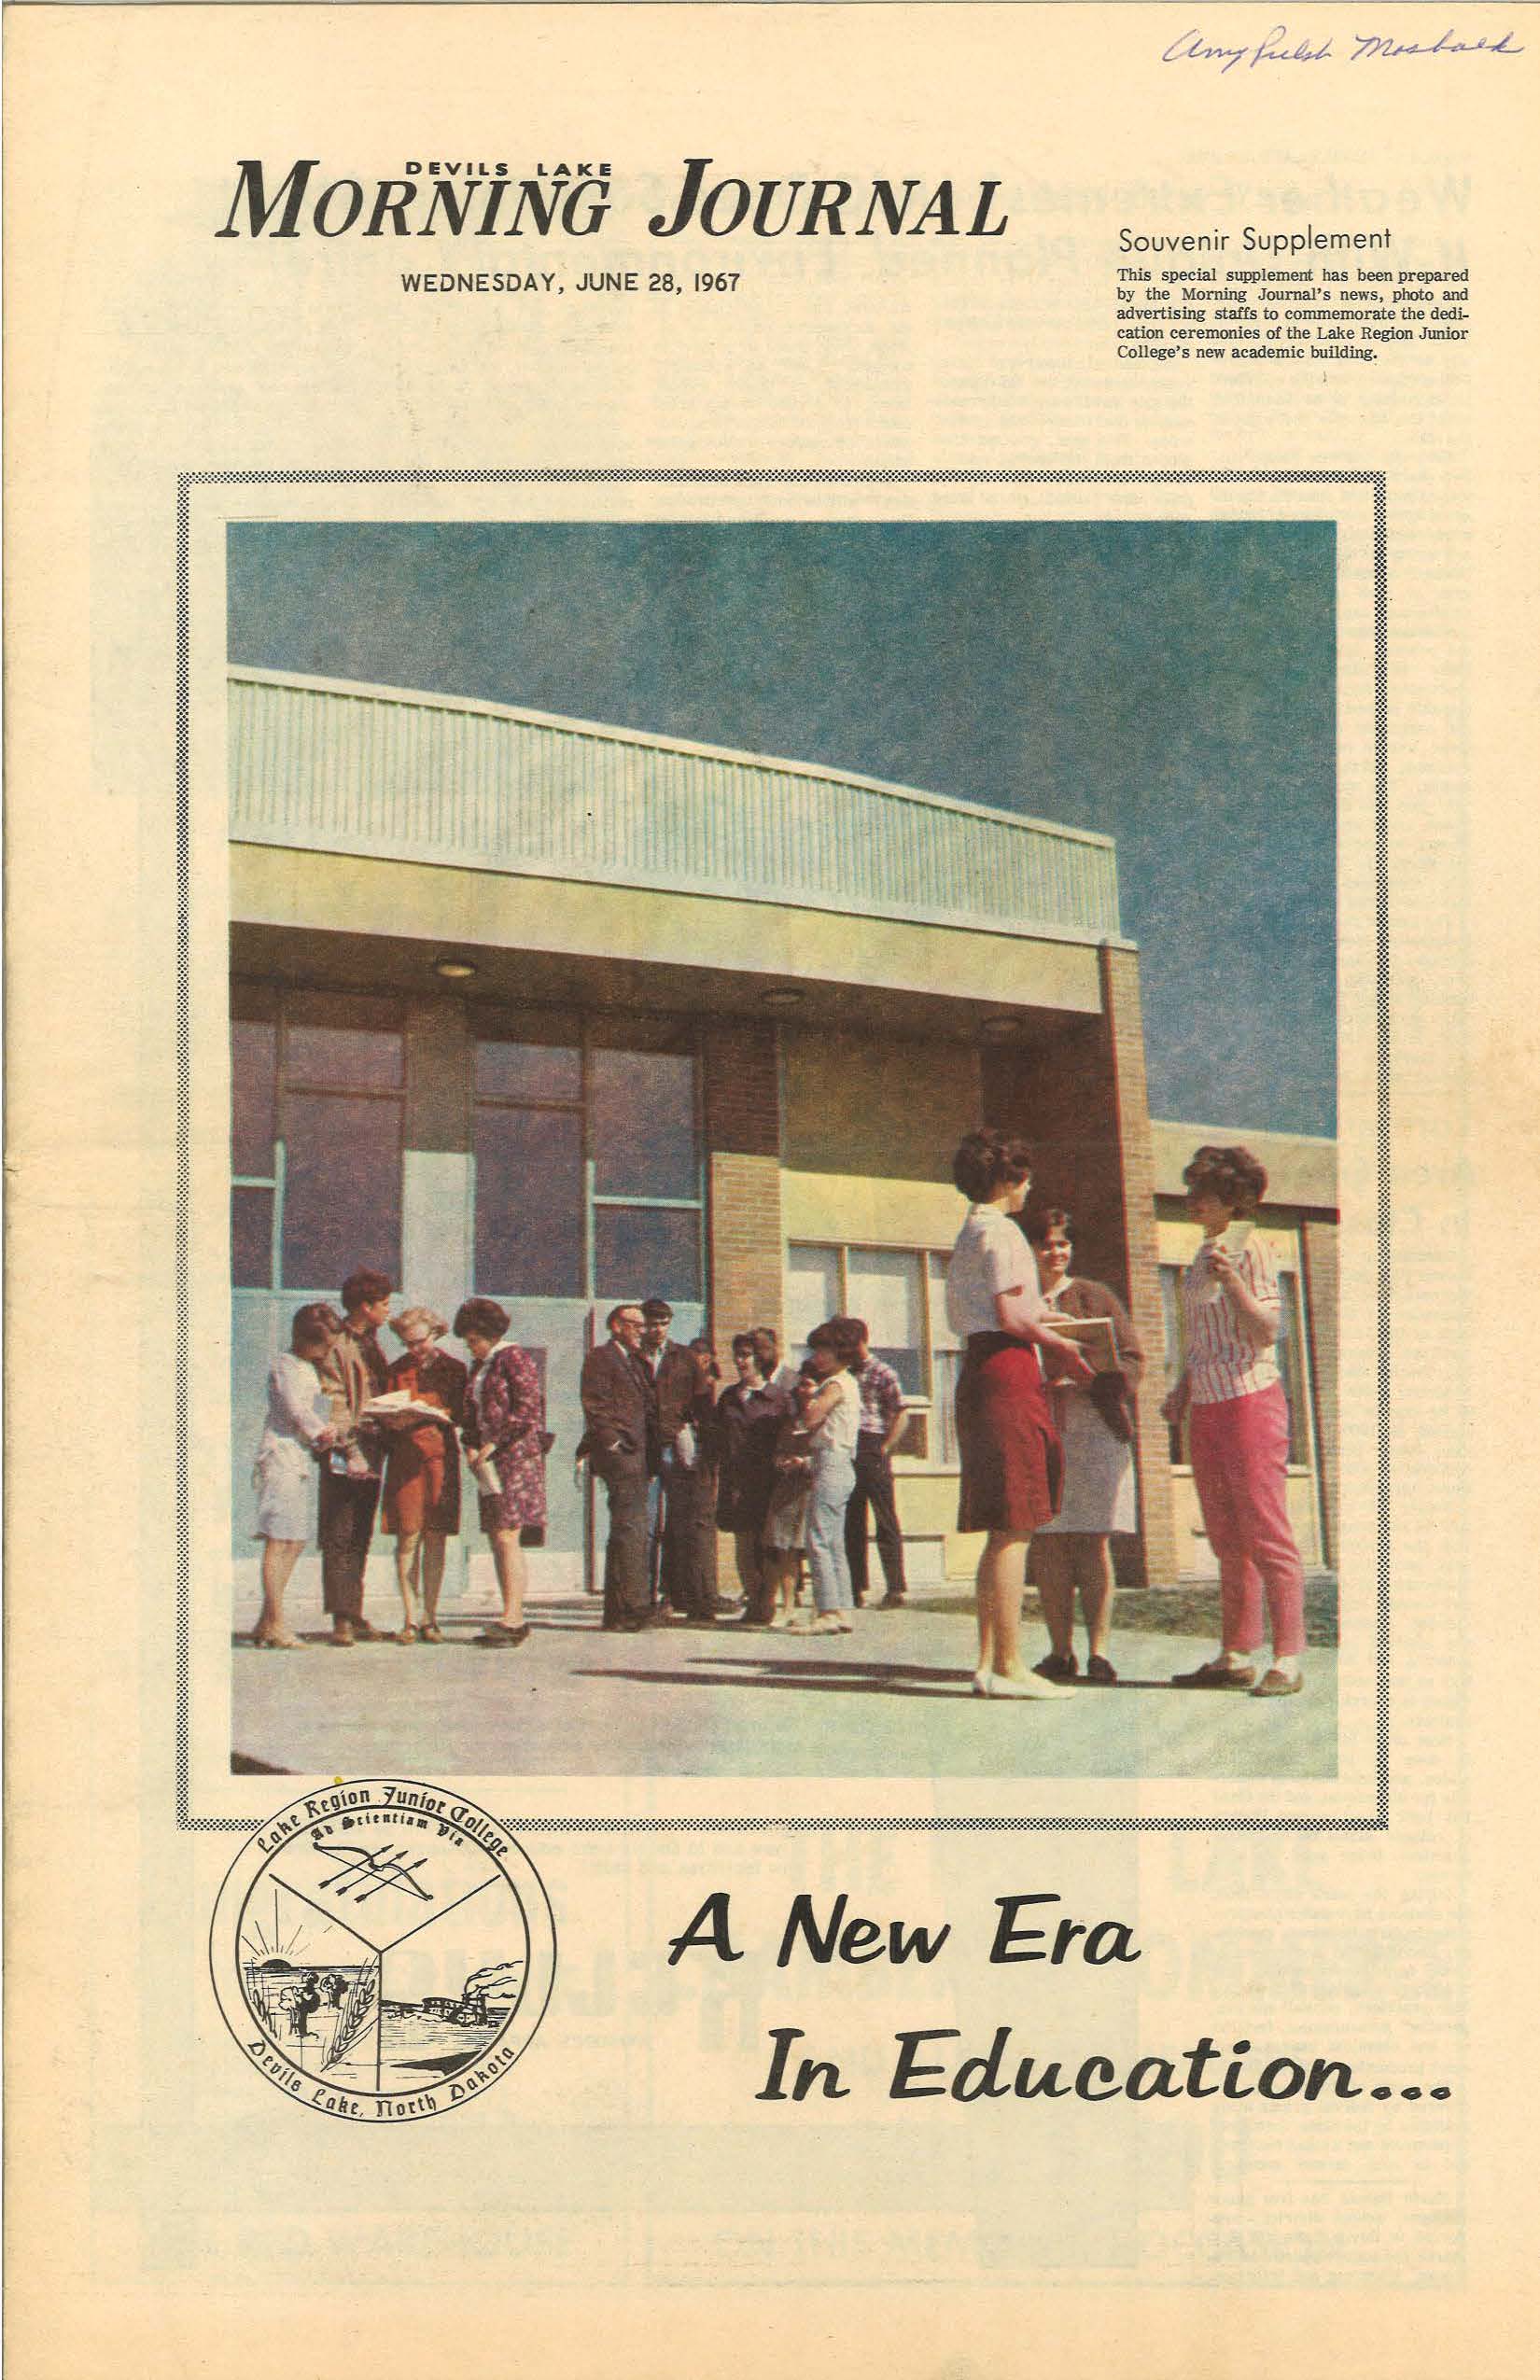 Lake Region Junior College 25th Anniversary Publication, 1967